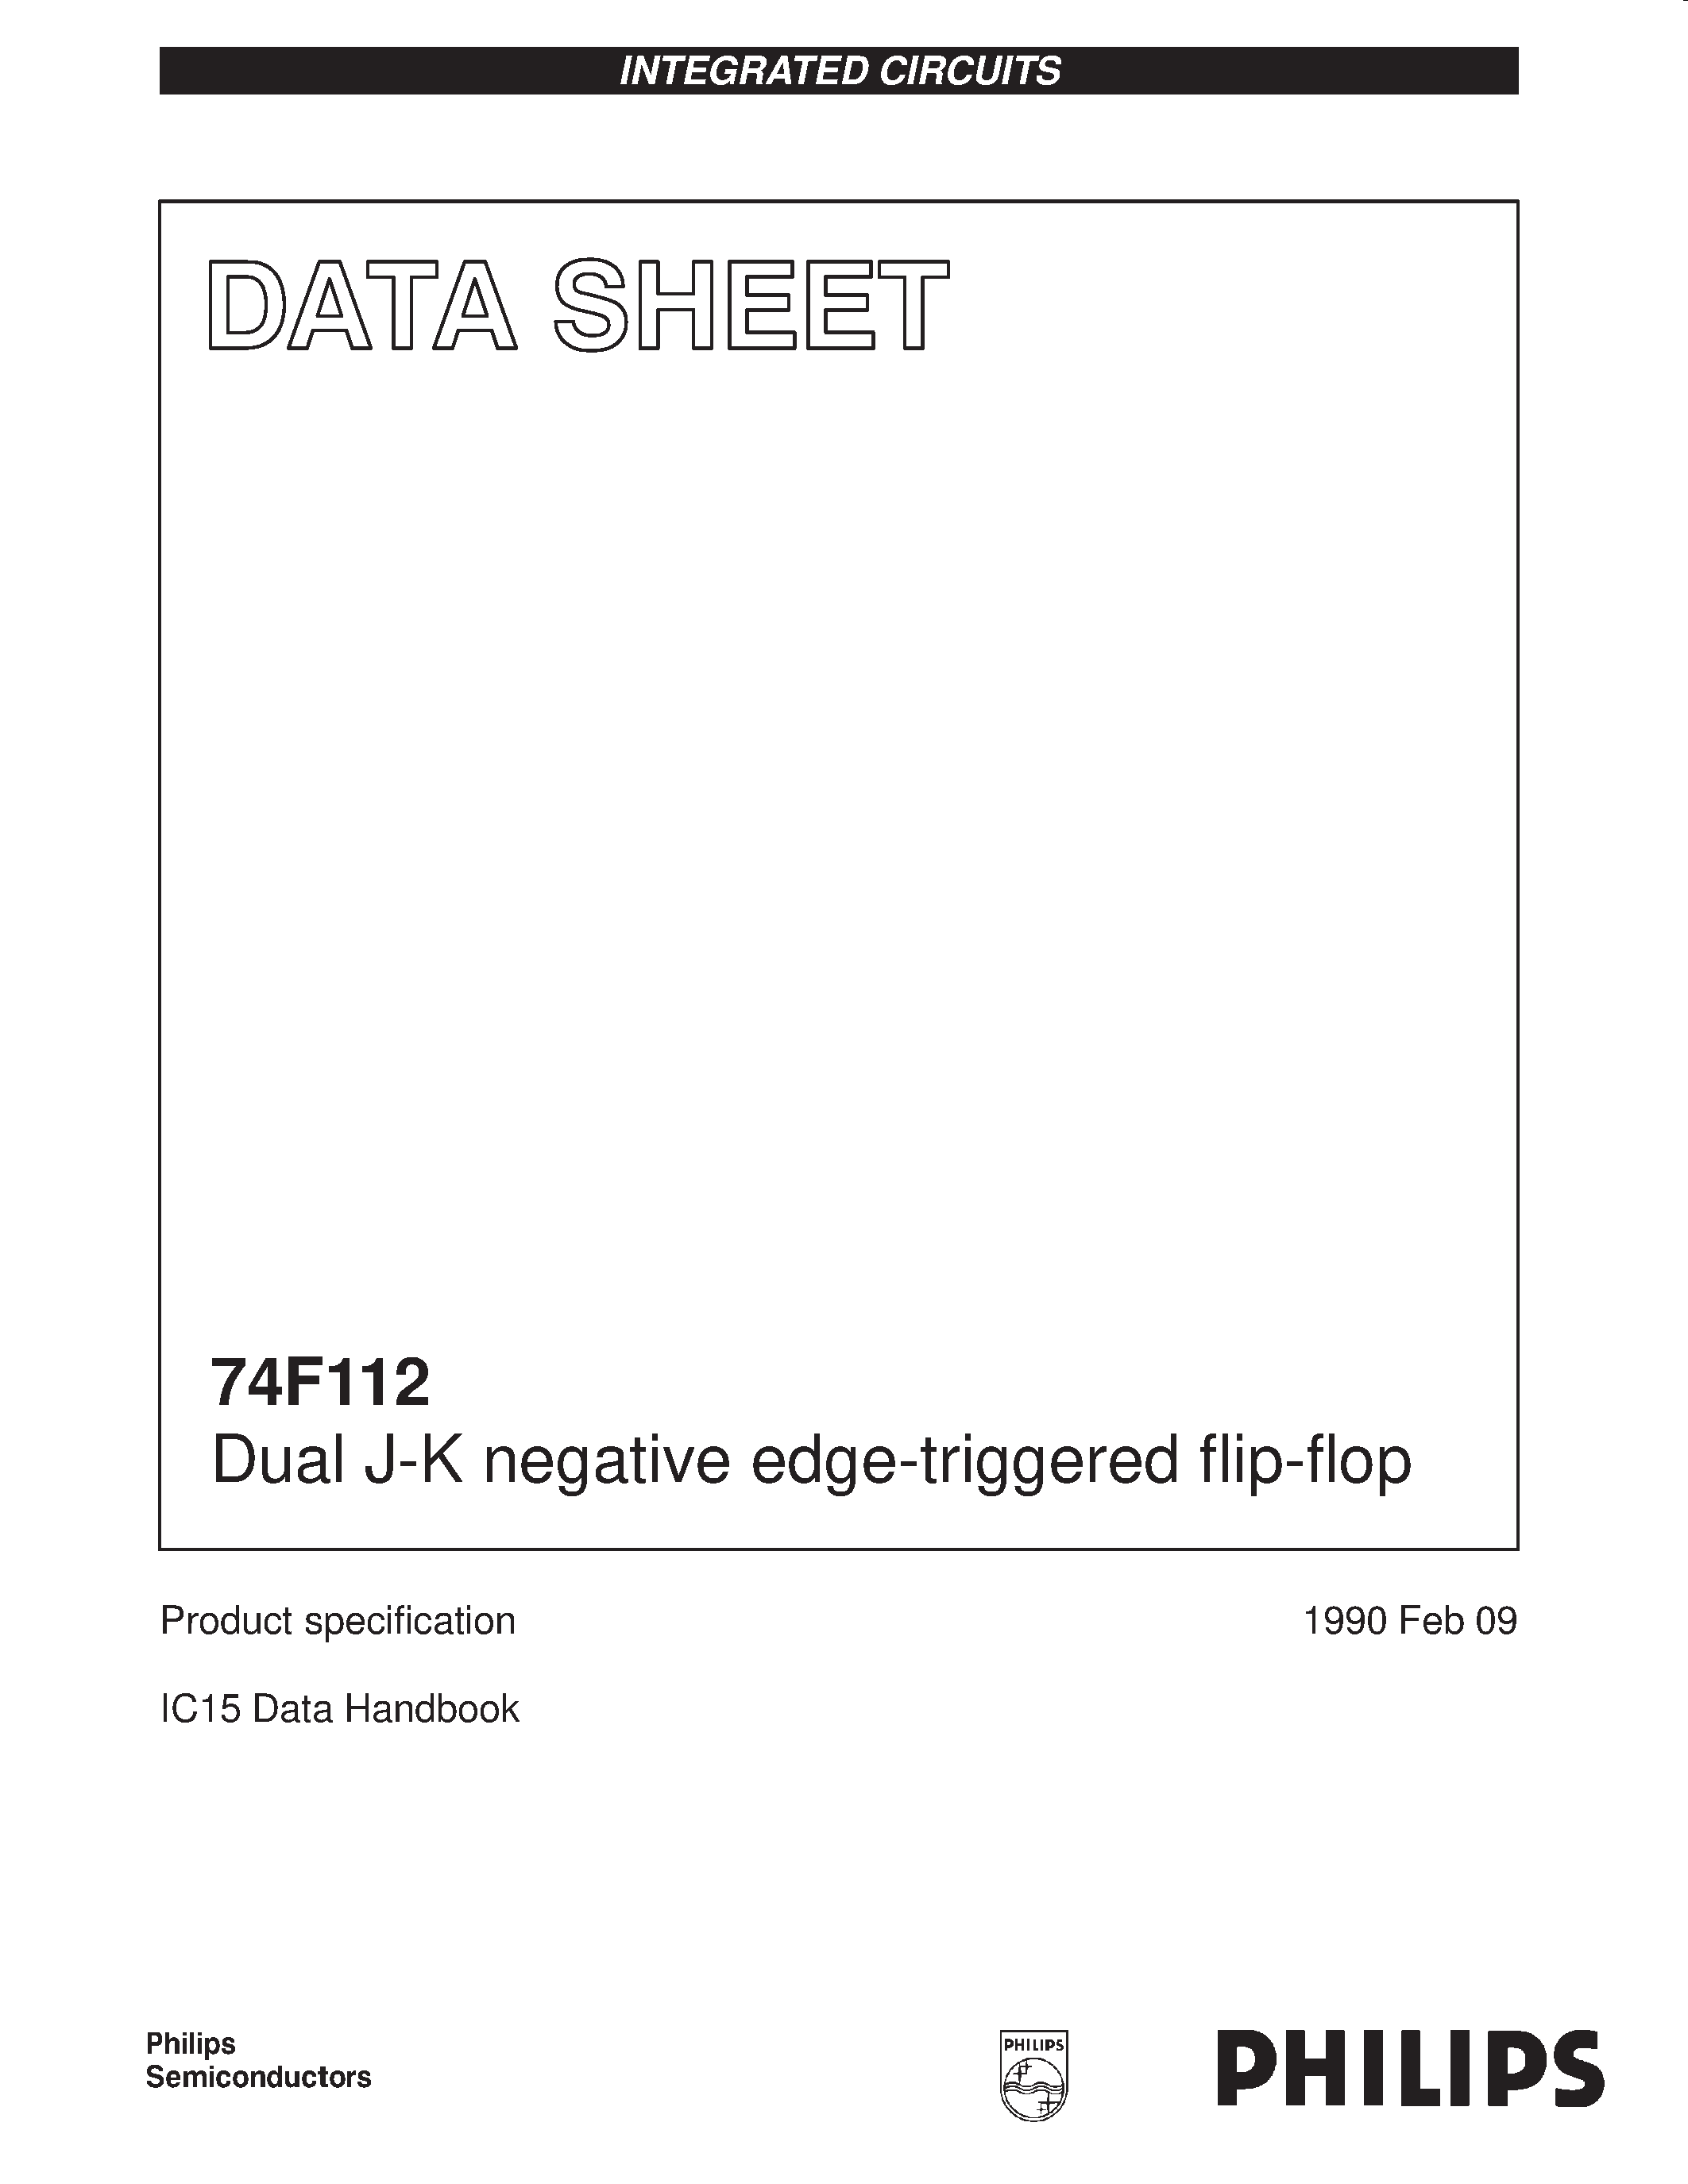 Даташит N74F112D - Dual J-K negative edge-triggered flip-flop страница 1